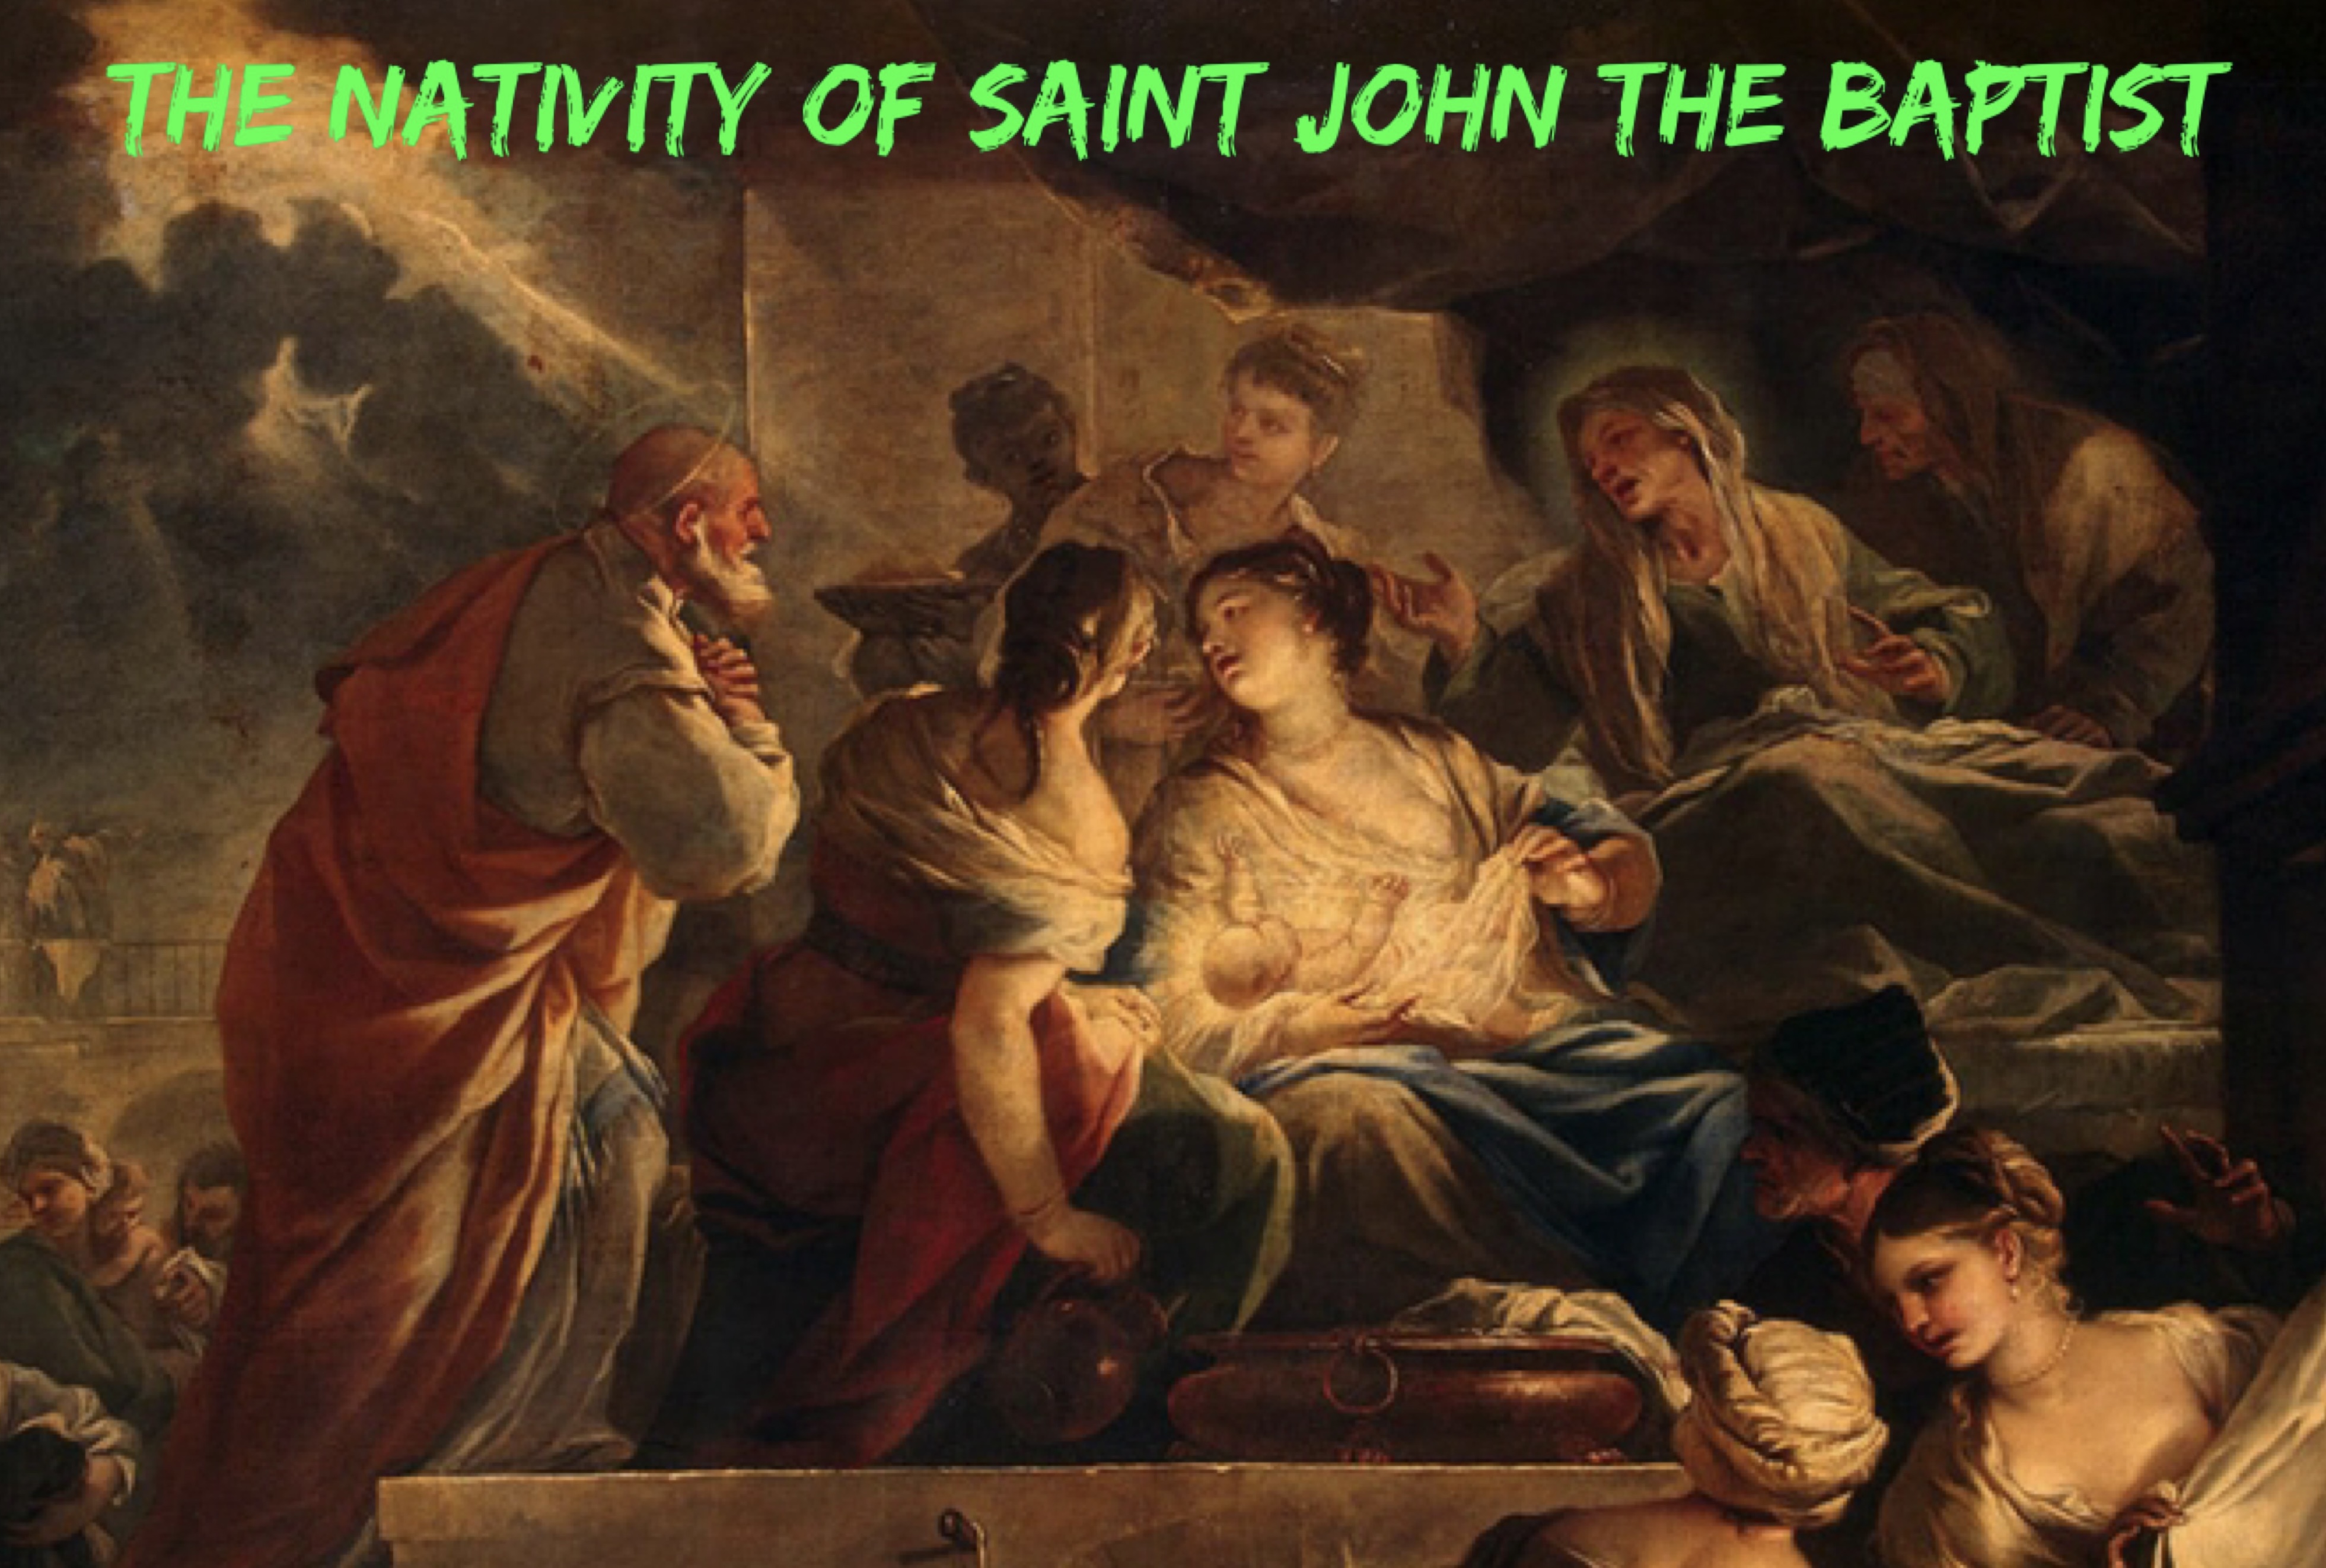 24th June - The Nativity of Saint John the Baptist